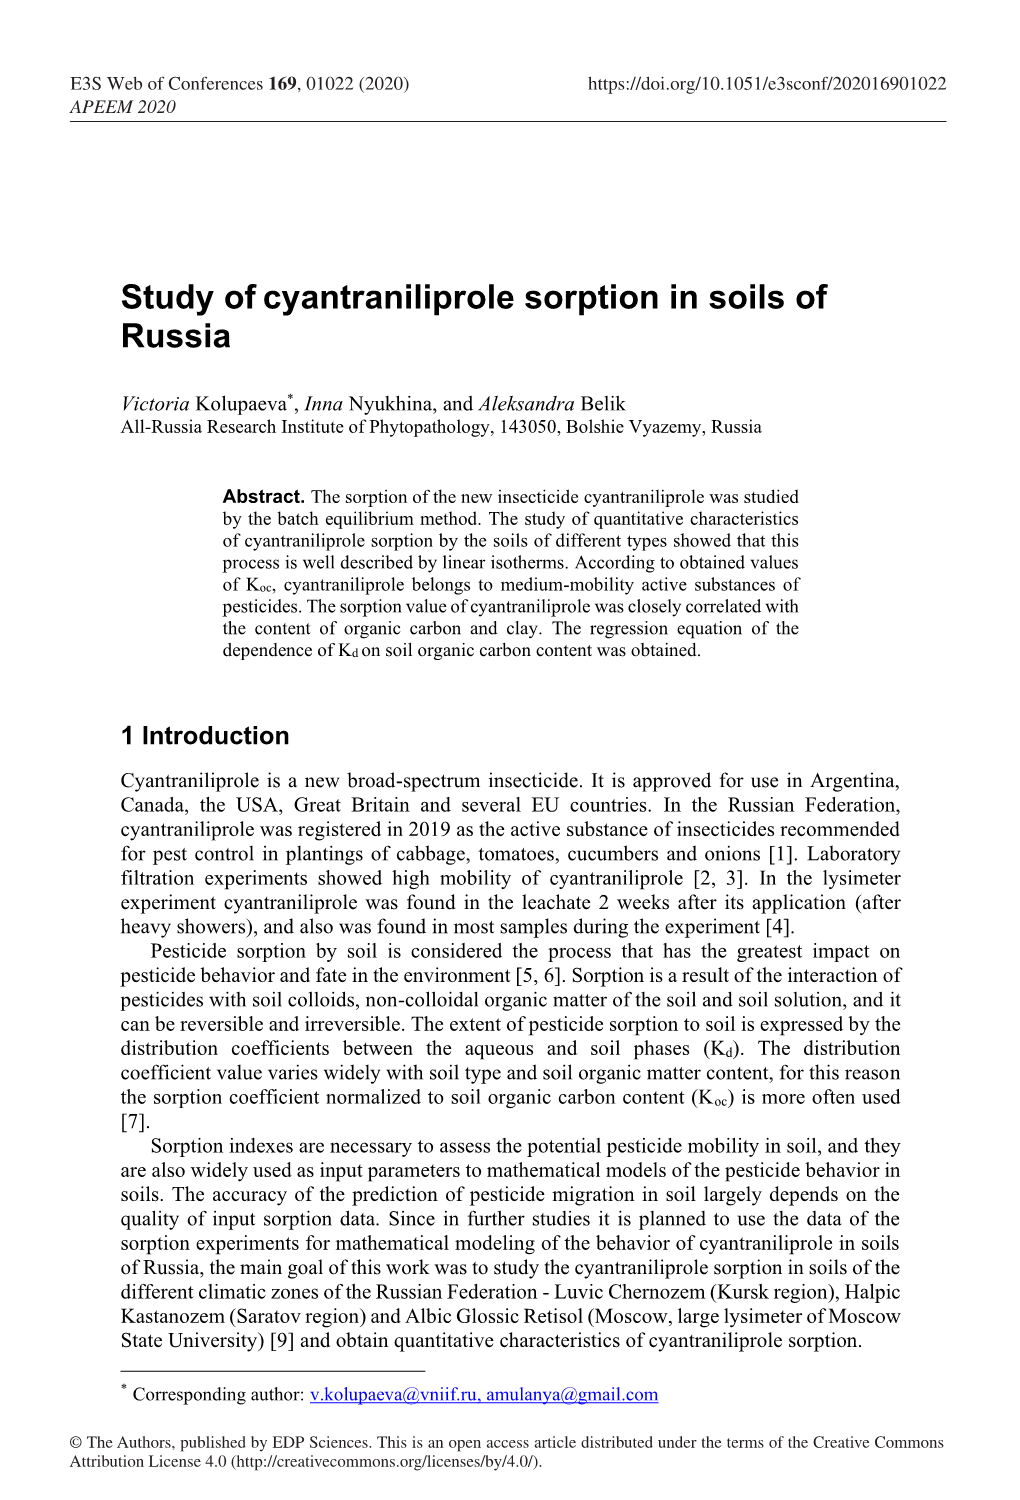 Study of Cyantraniliprole Sorption in Soils of Russia